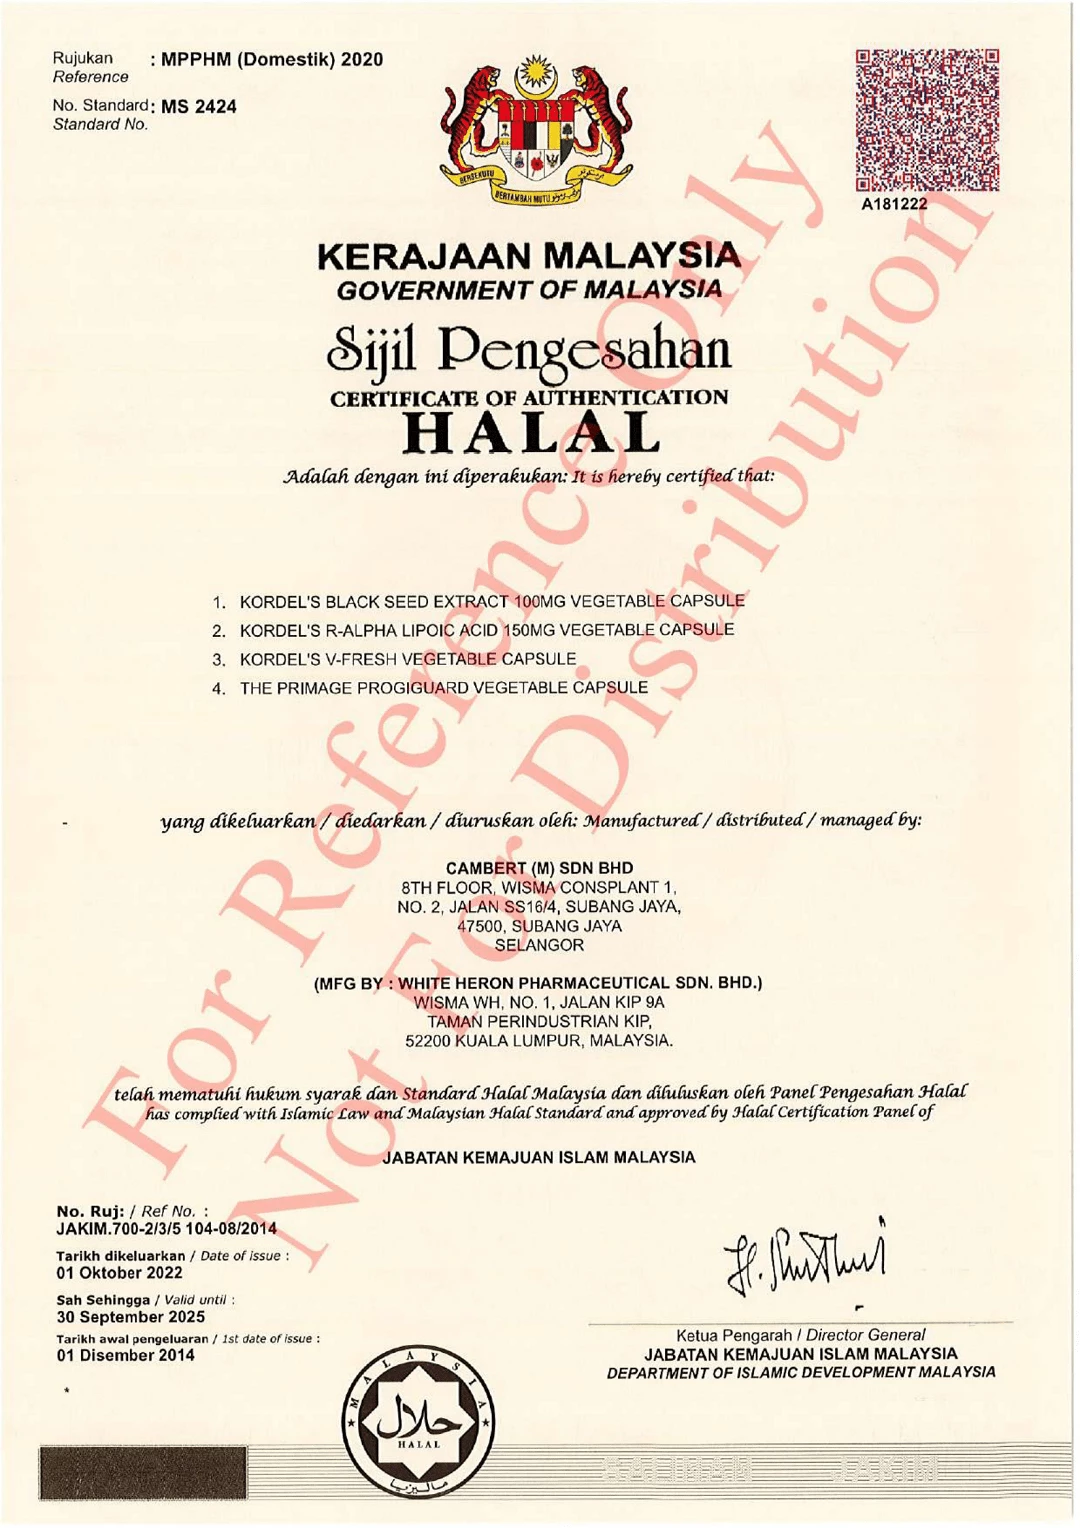 Halal Certification For Kordel's Black Seed Extract, R-Alpha Lipoic Acid and V-Fresh